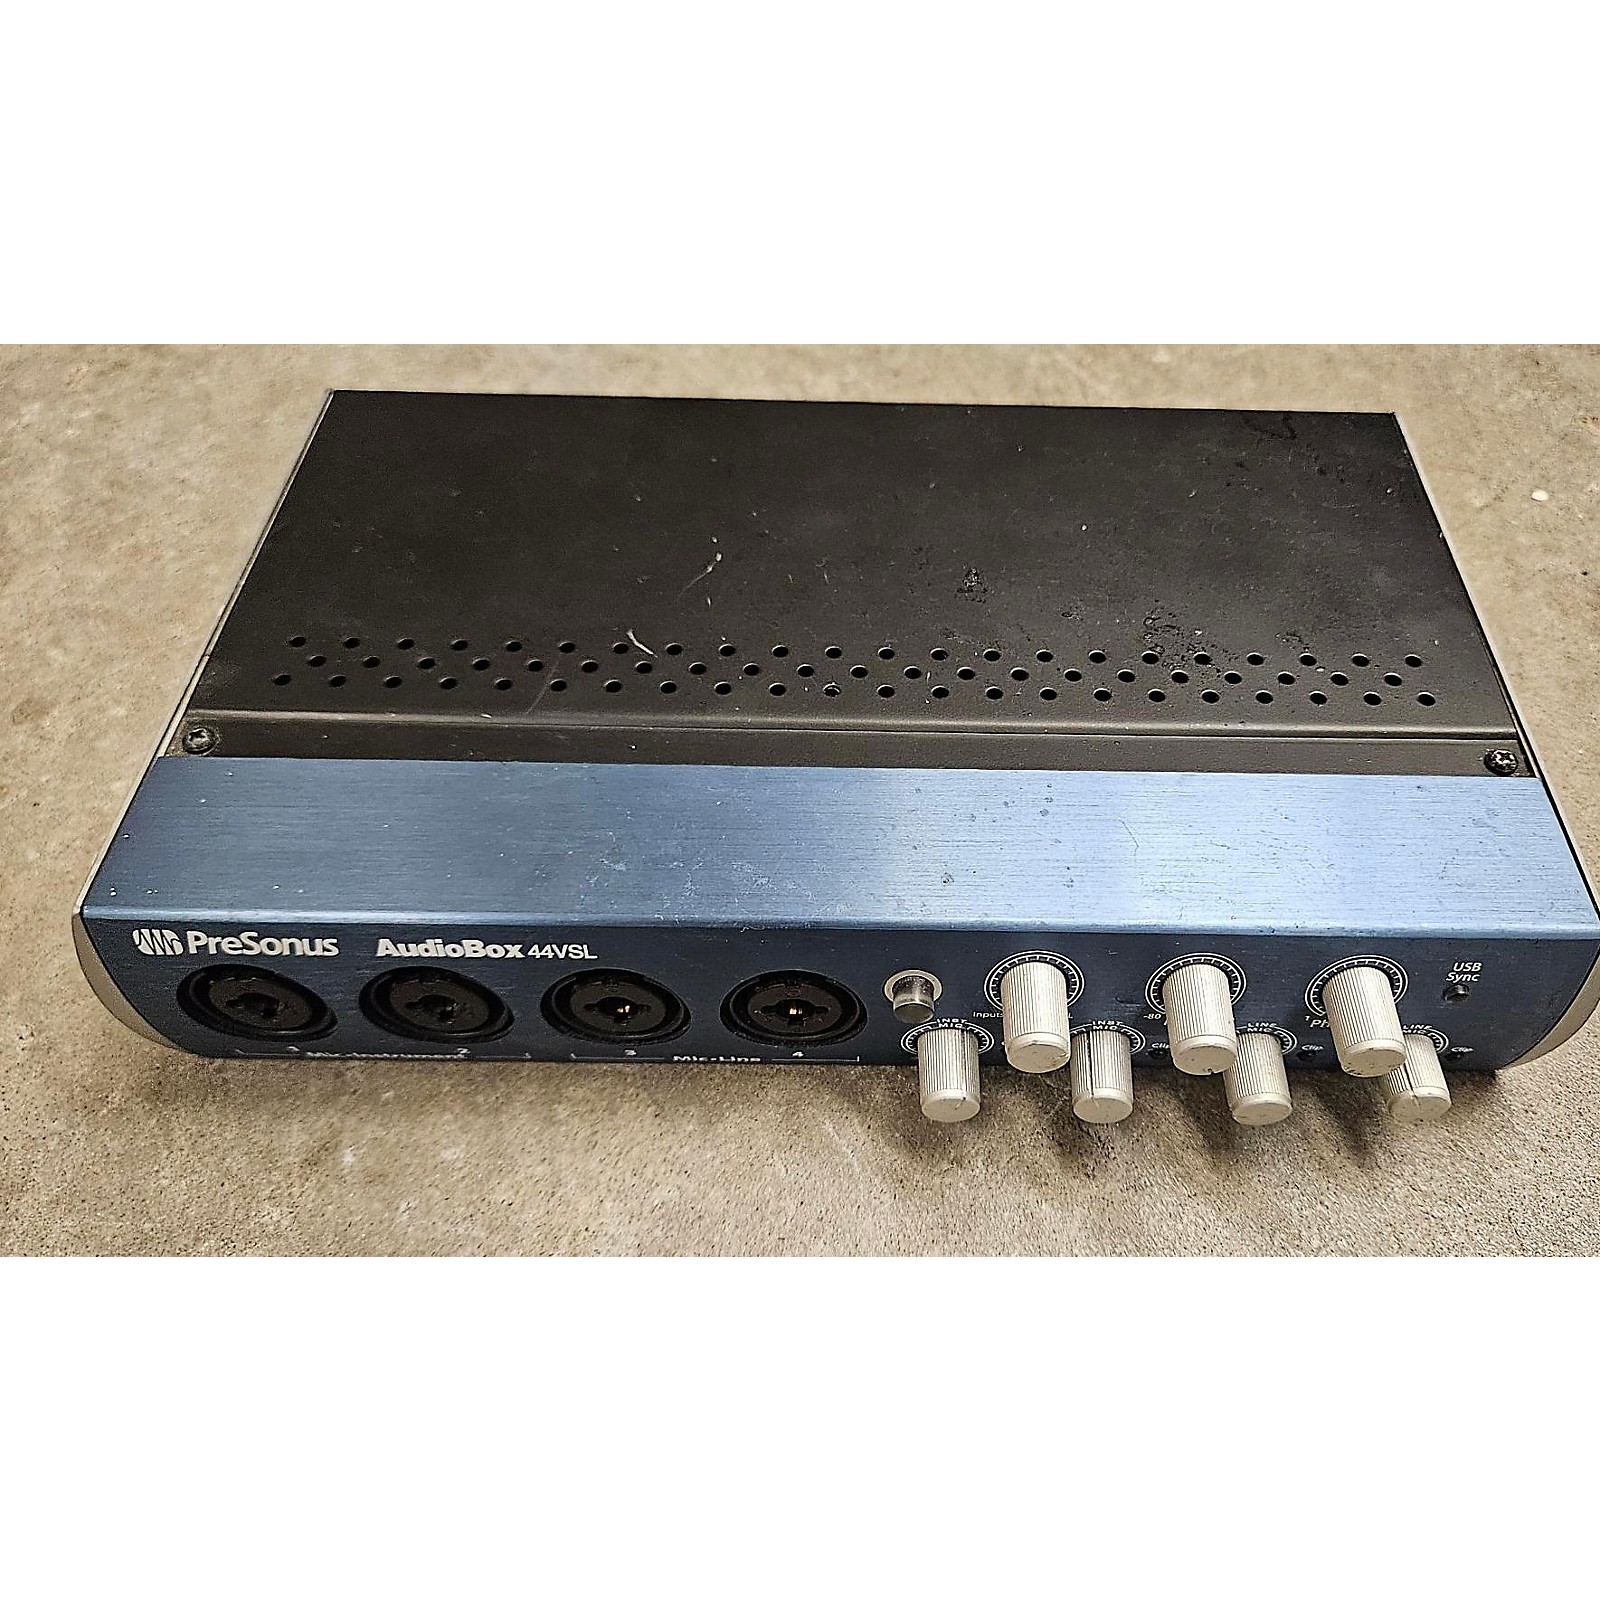 Used PreSonus Audiobox 44vsl Audio Interface | Guitar Center